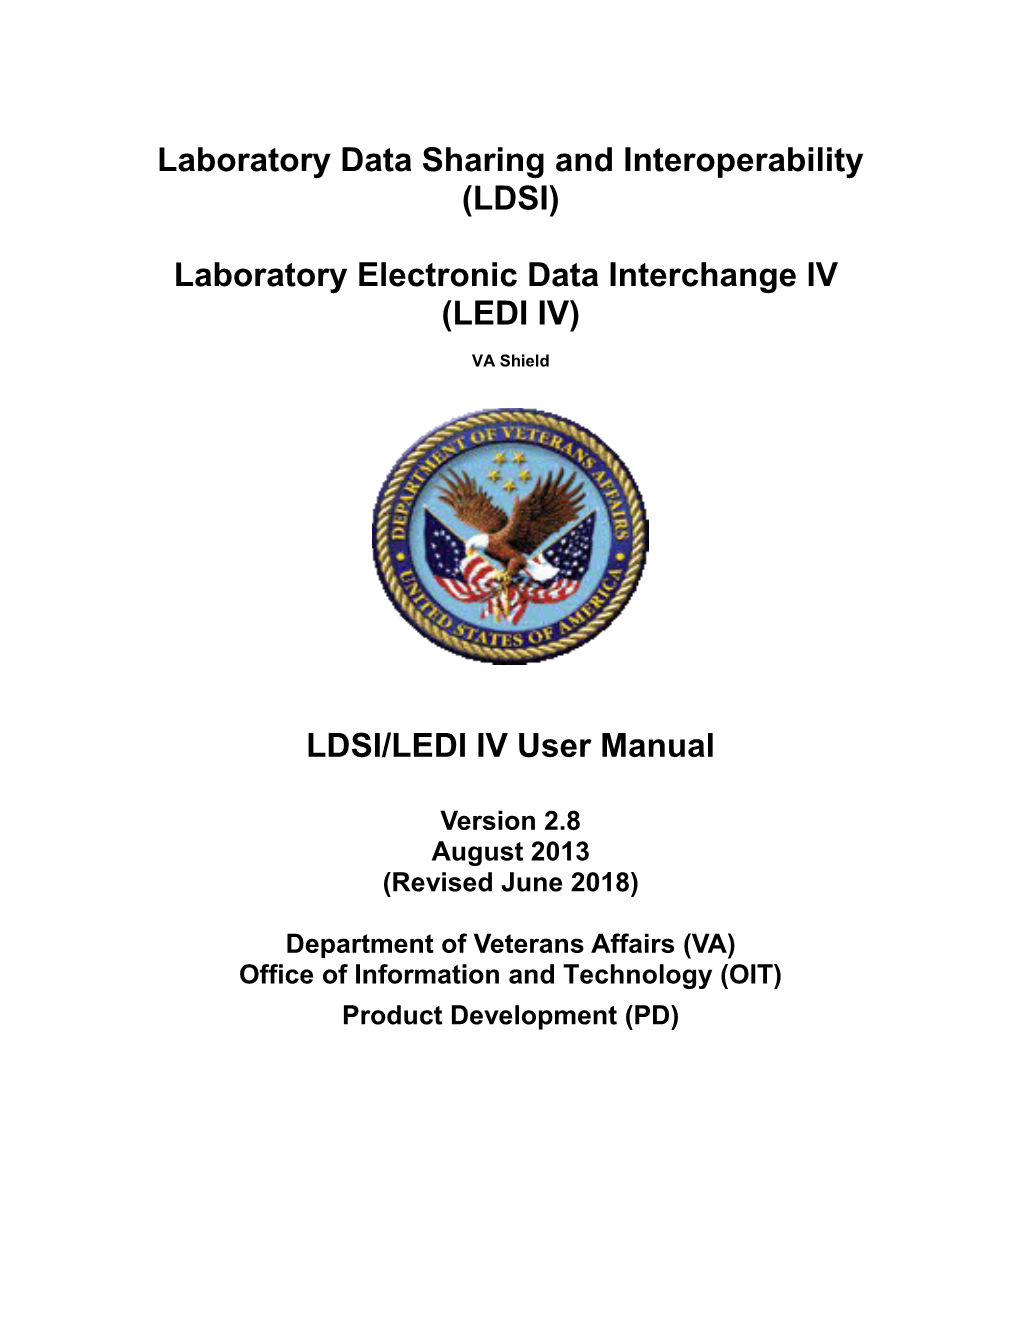 LEDI IV Update User Manual